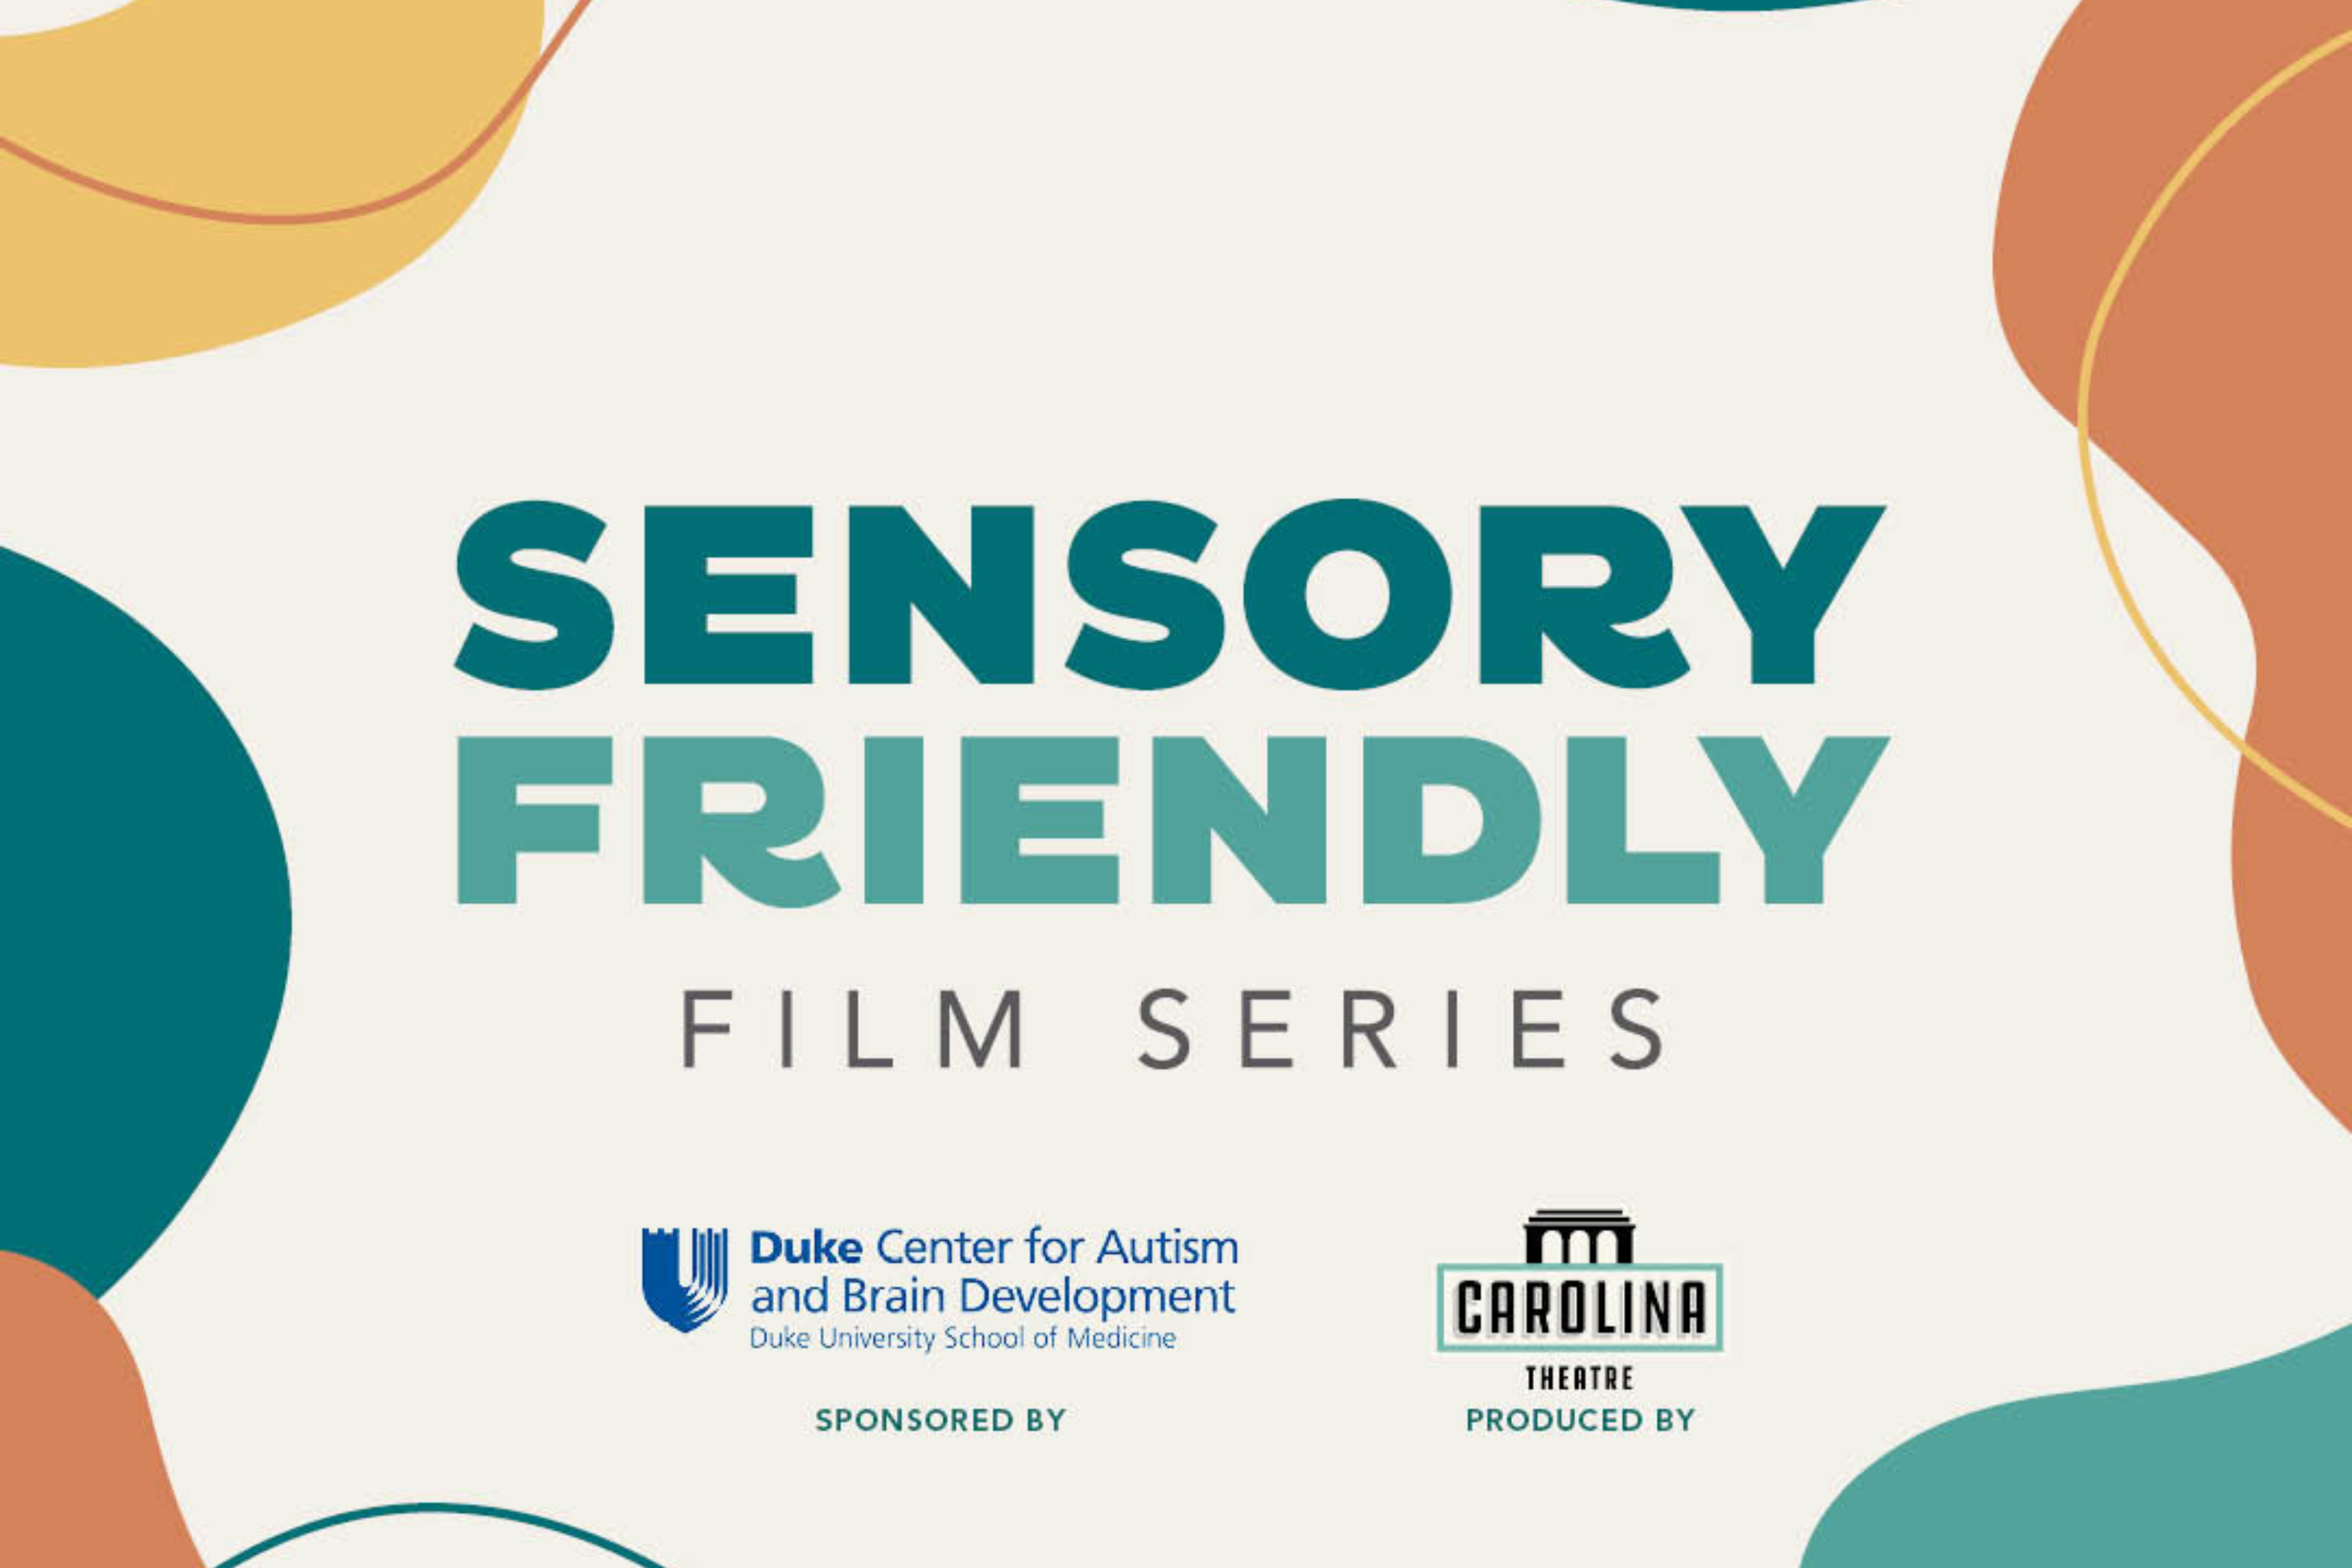 Sensory Friendly Film Series produced by the Carolina Theatre